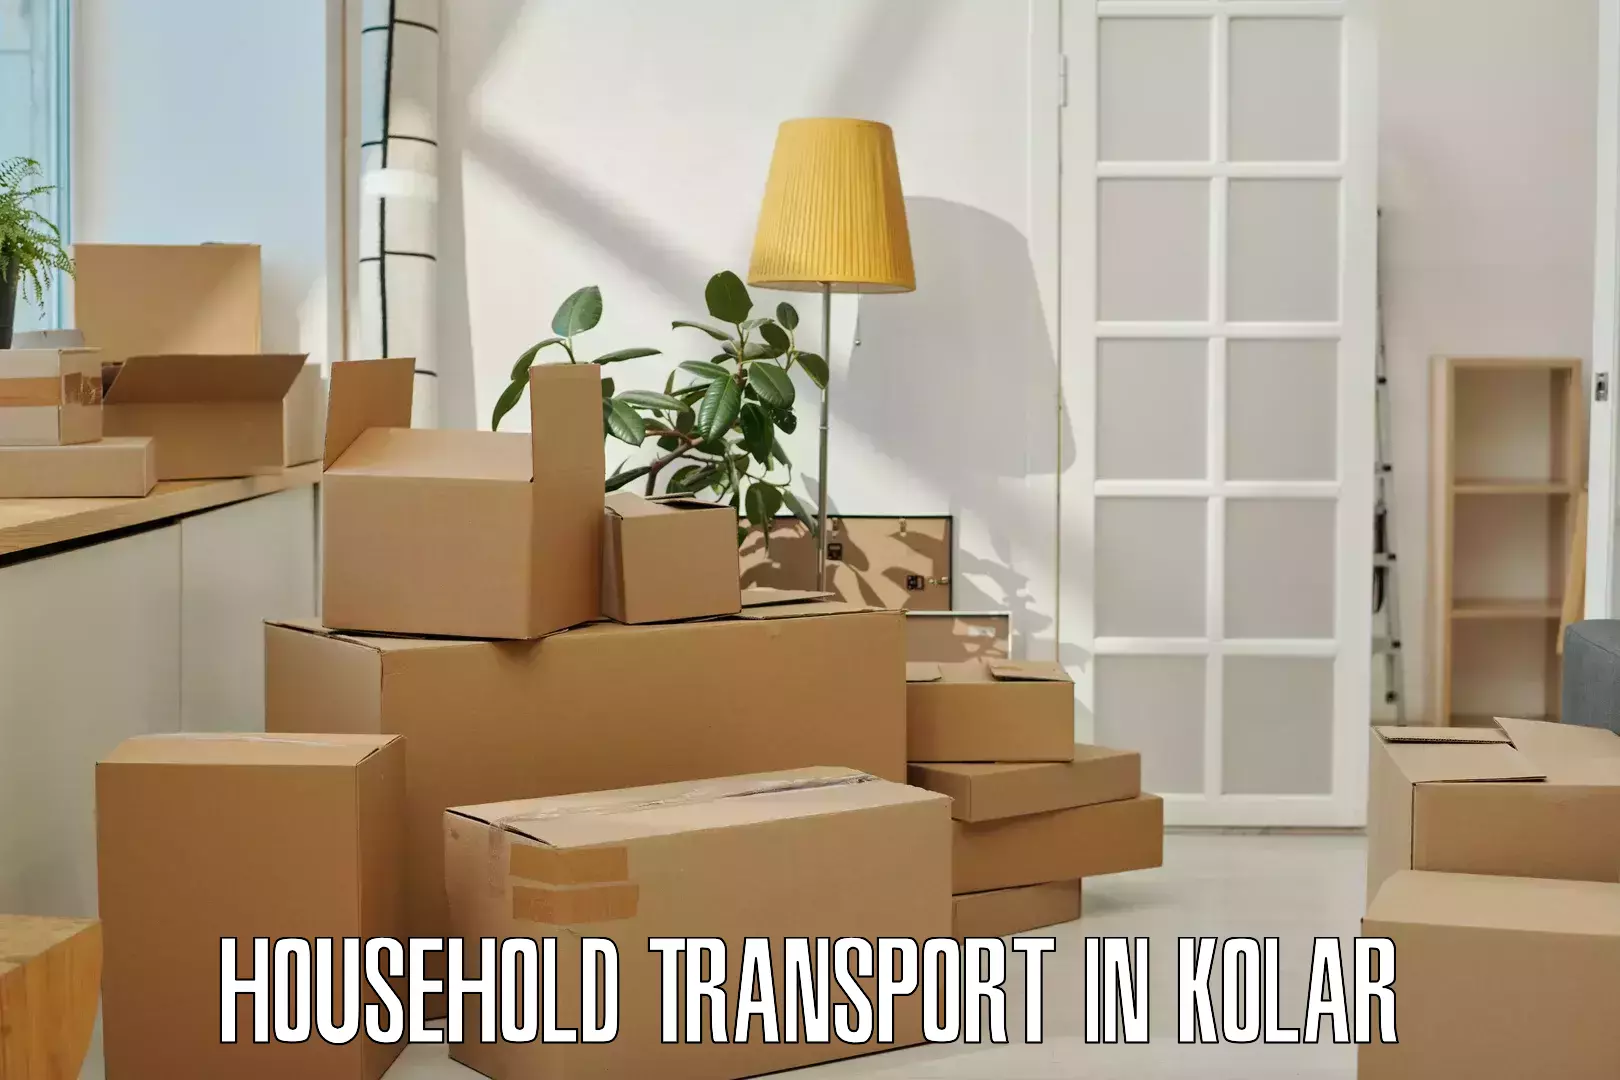 Efficient relocation services in Kolar